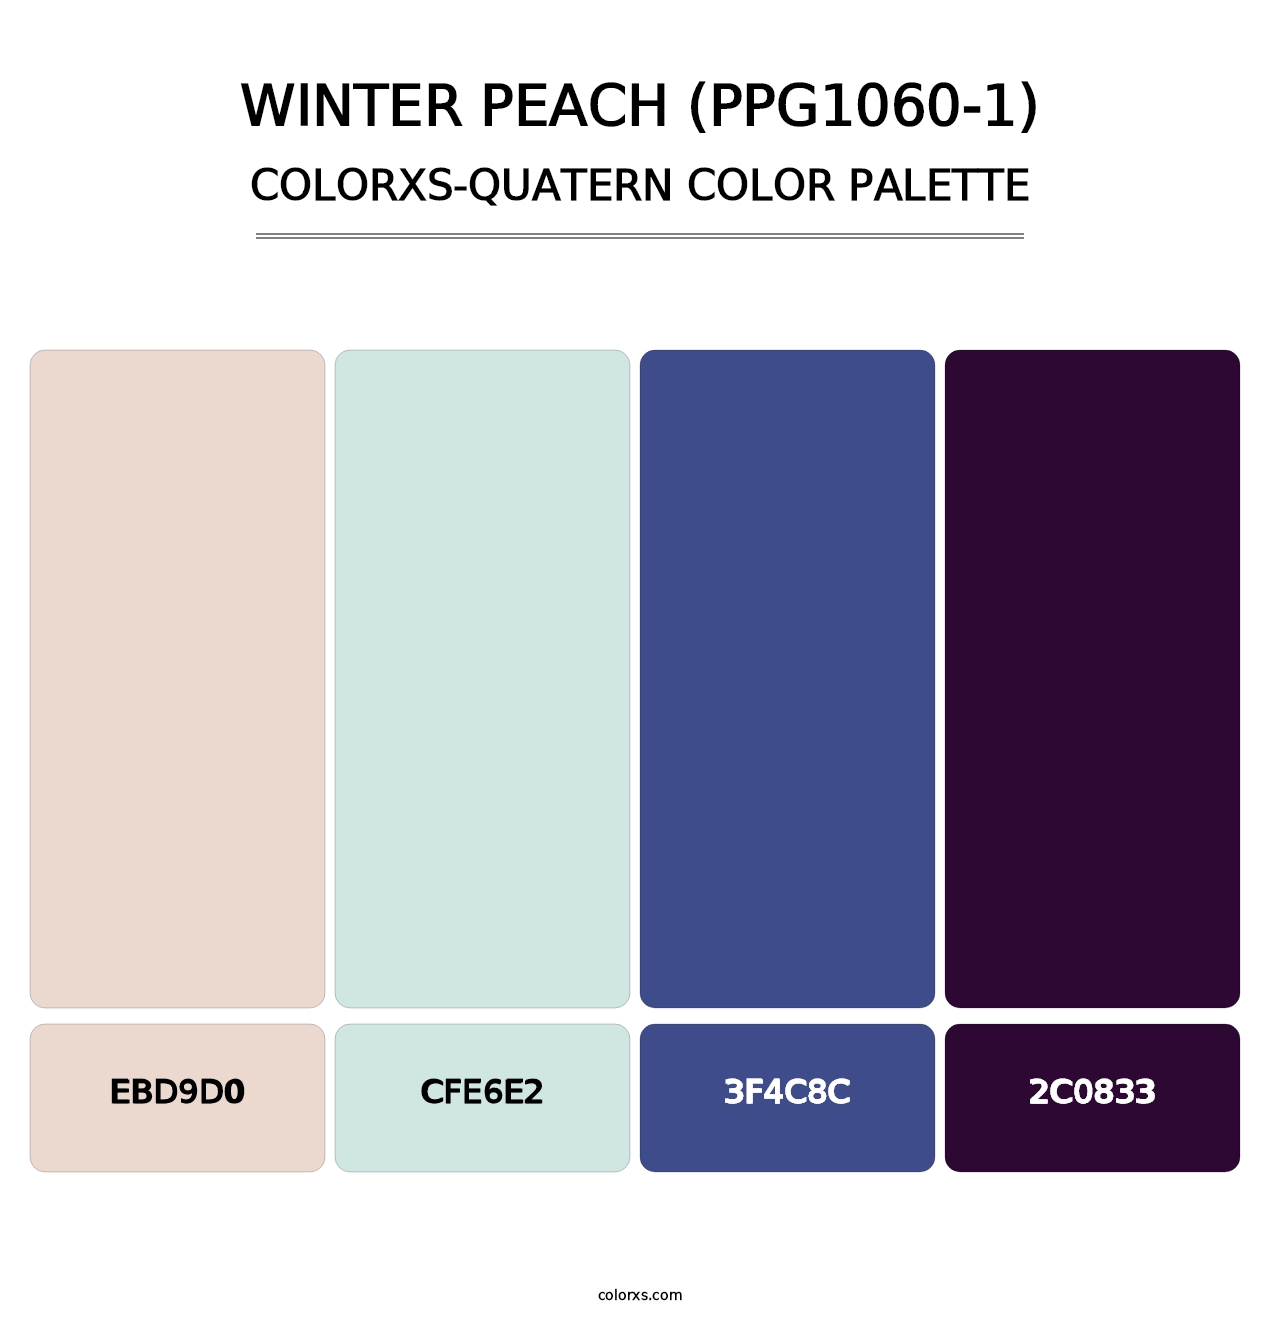 Winter Peach (PPG1060-1) - Colorxs Quatern Palette